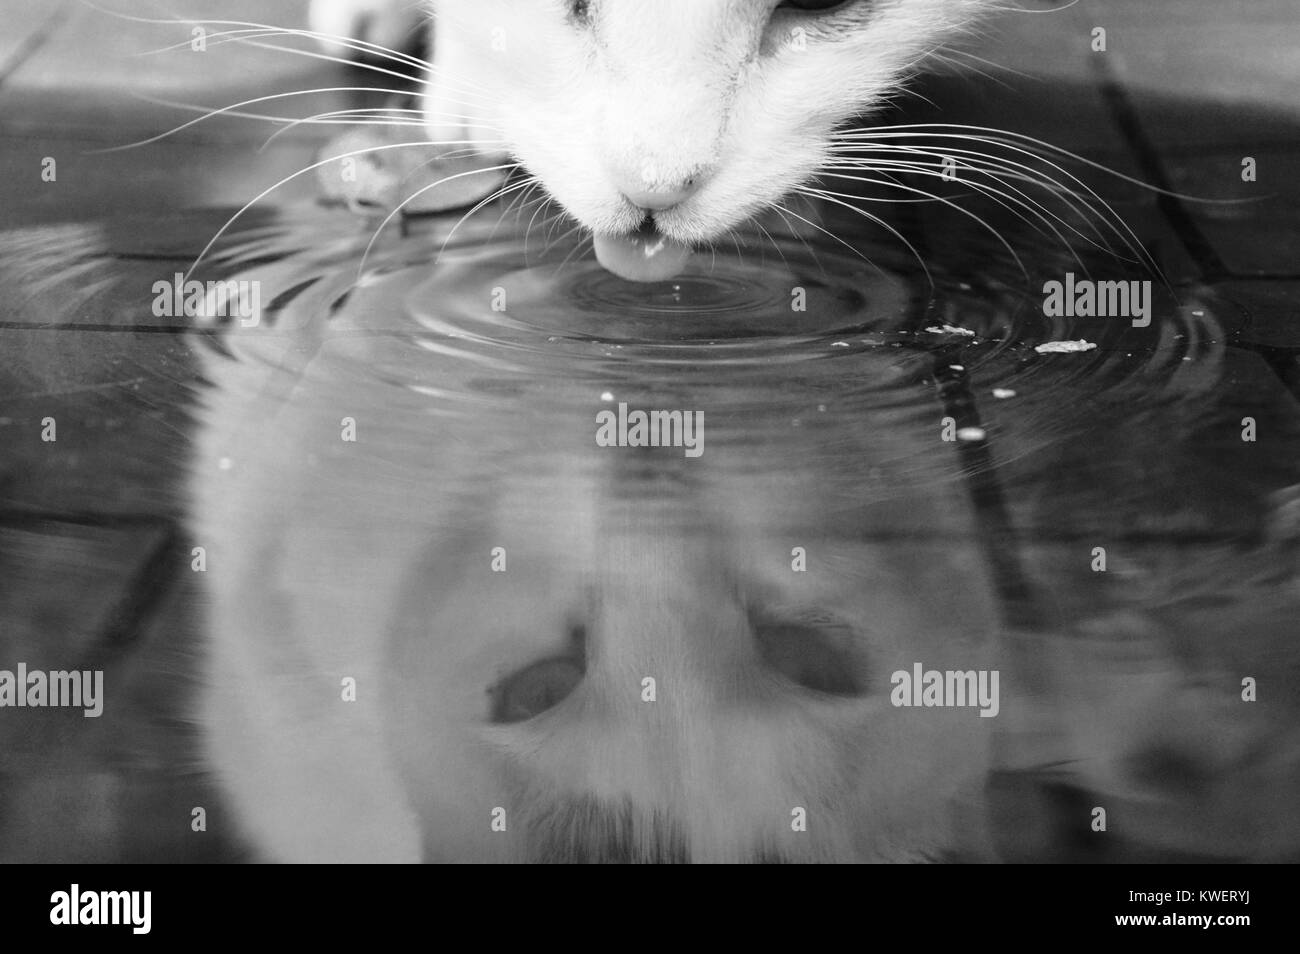 cat drinks water Stock Photo